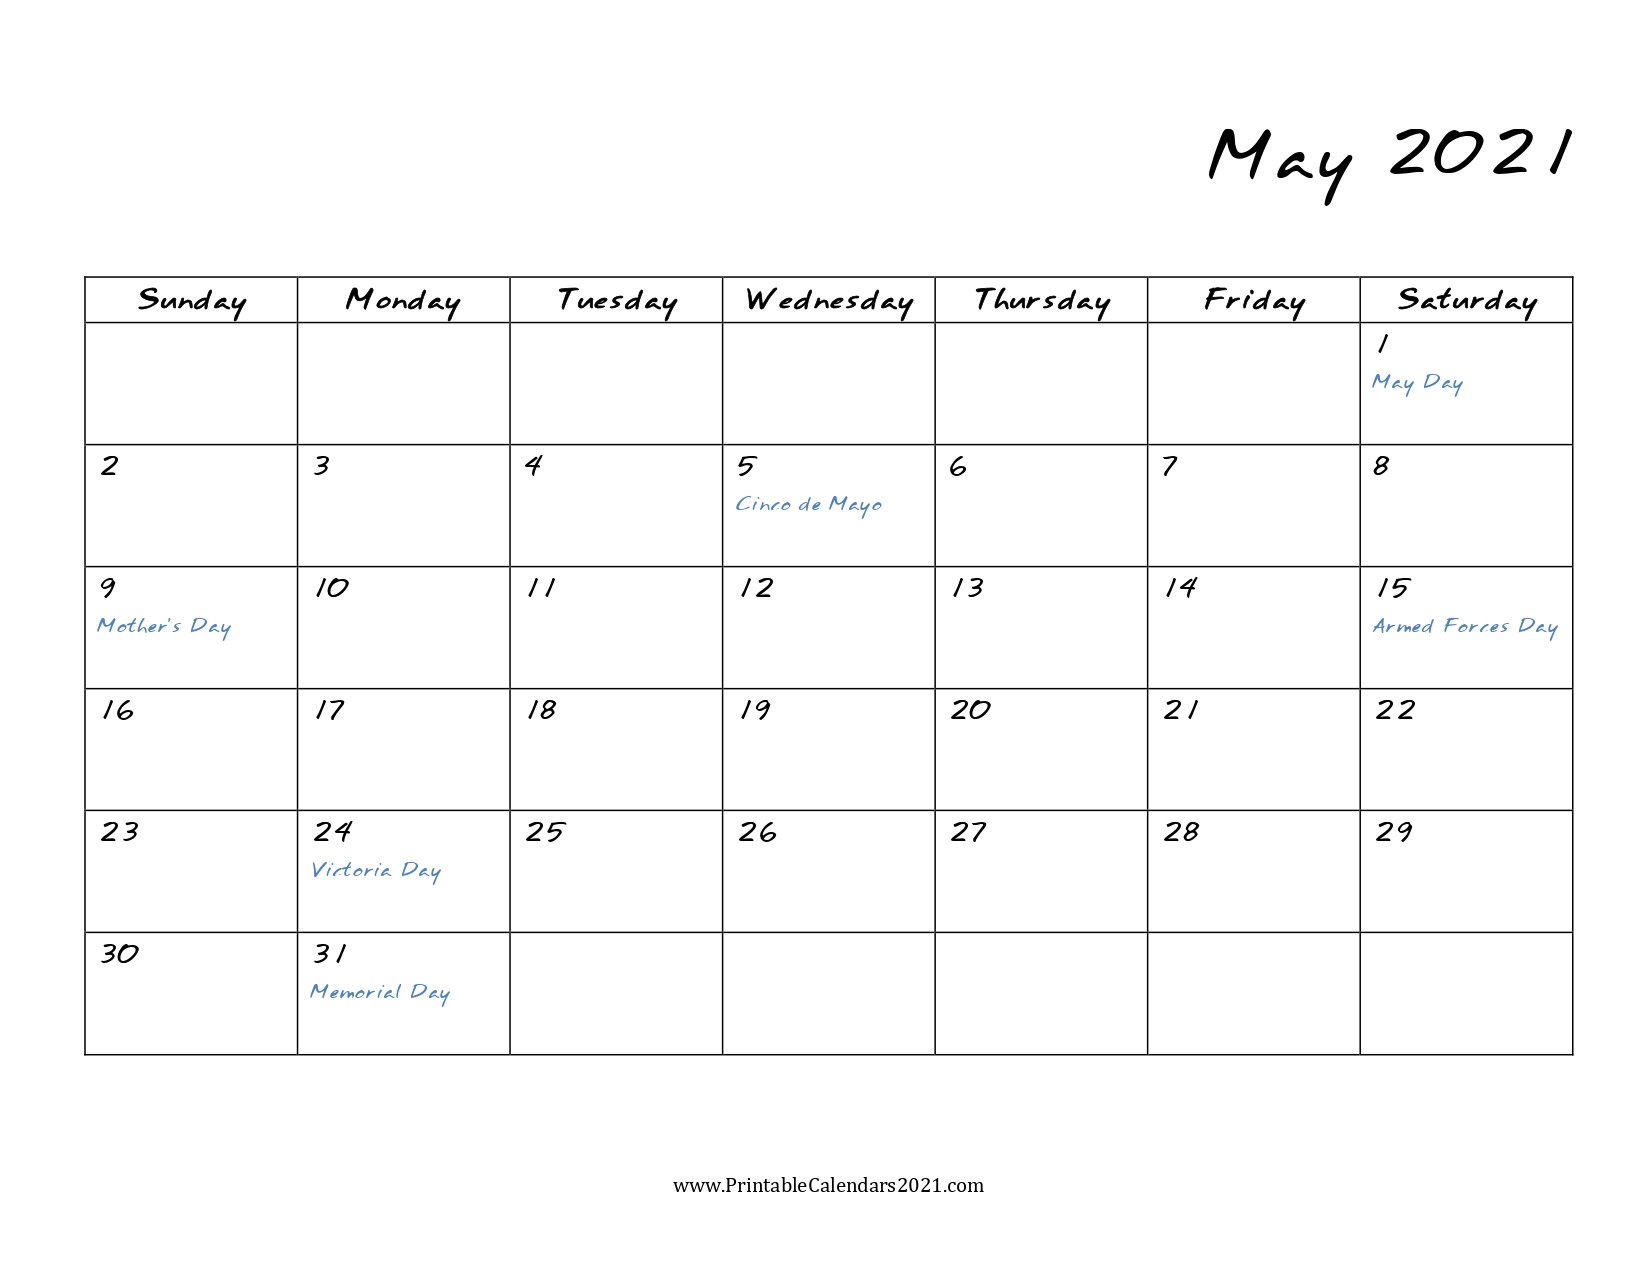 Printable Calendar 2022 May, May 2022 Calendar Pdf-Printable Calendars By Beta Calendars 2021